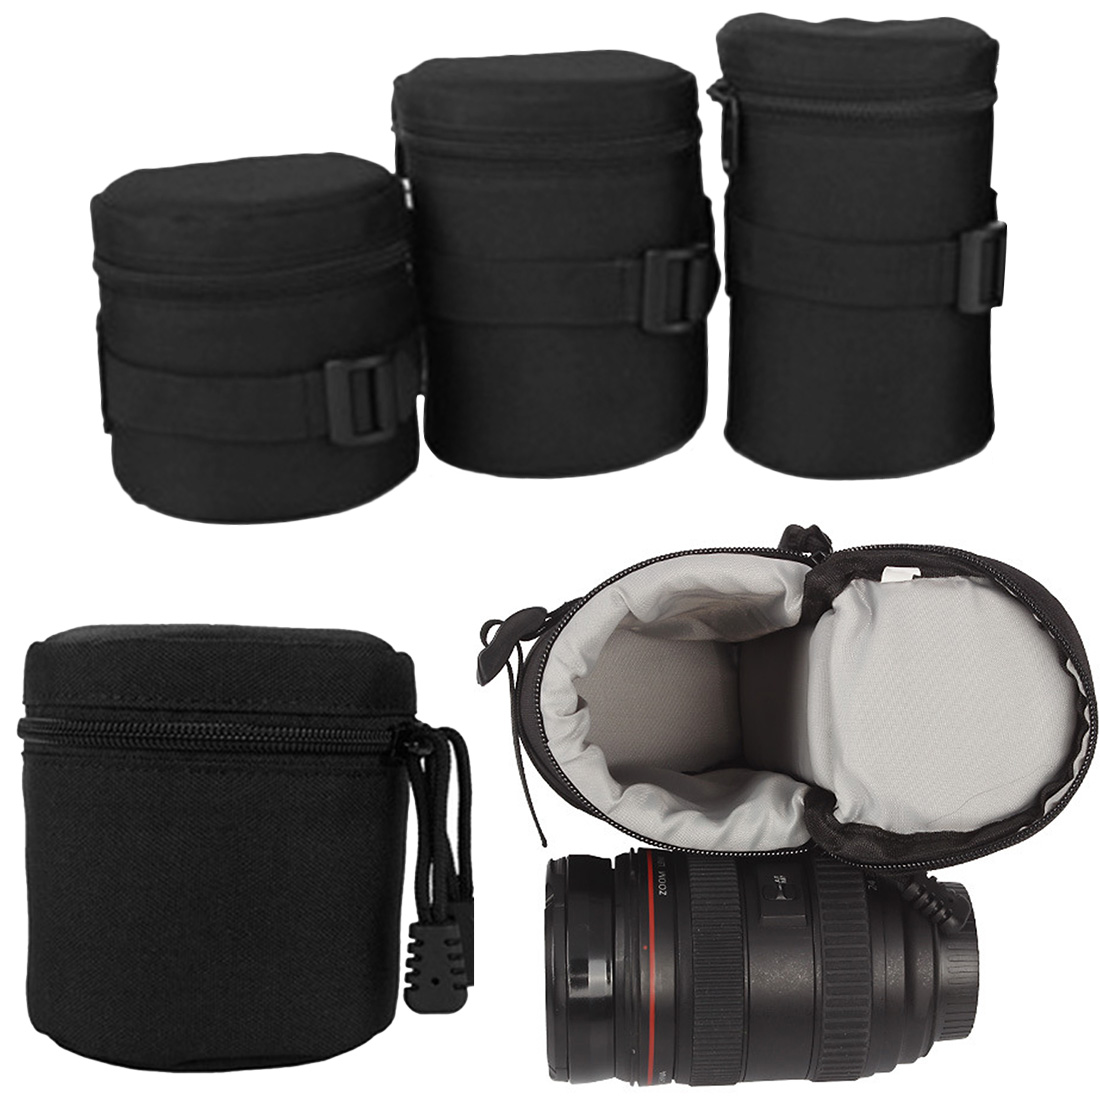 Voor Dslr Nikon Canon Sony Lenzen Zwart Waterdichte Padded Protector Camera Lens Bag Case Pouch Maat S M L